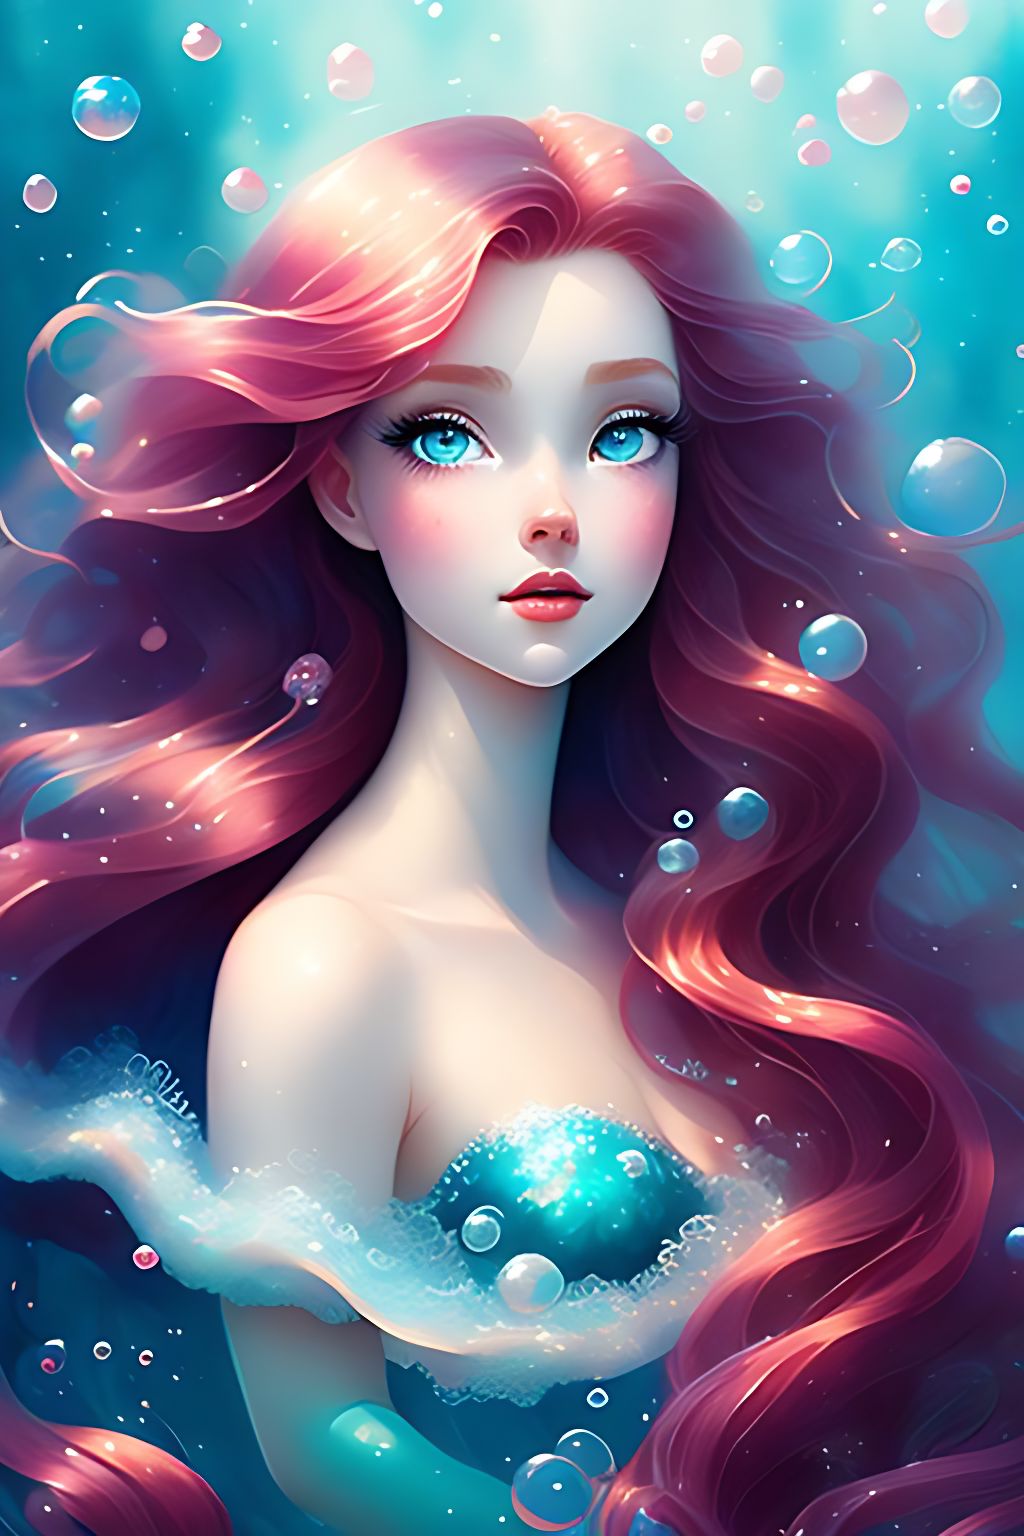 Sana Little mermaid, long wavy red hair in motion, blue eyes, happy